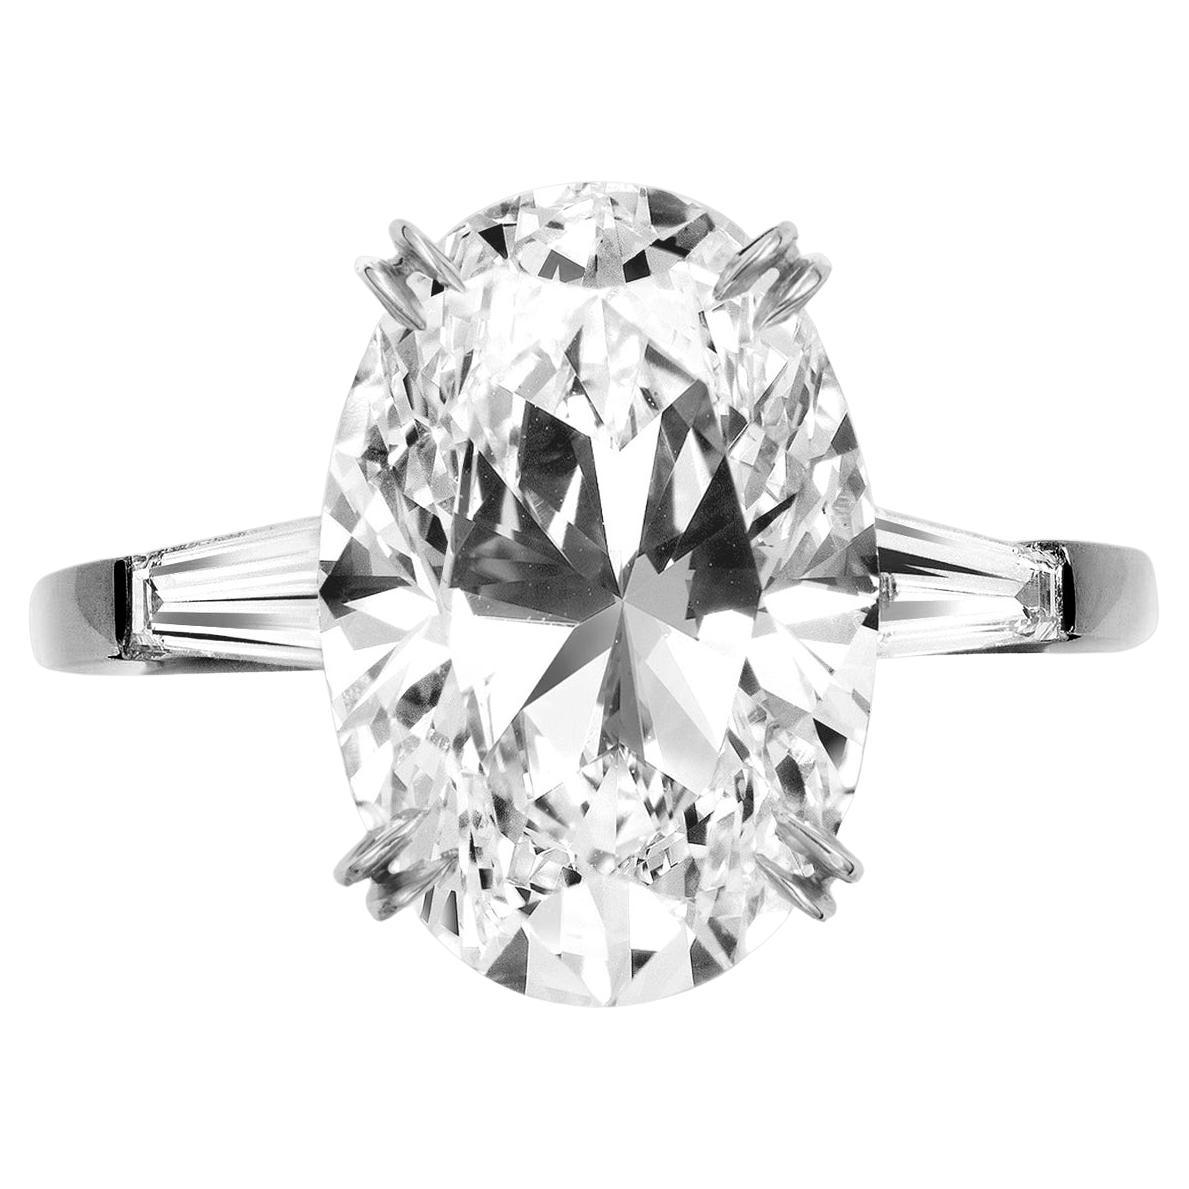 Internally Flawless GIA Certified 8.31 Carat Oval Diamond Ring